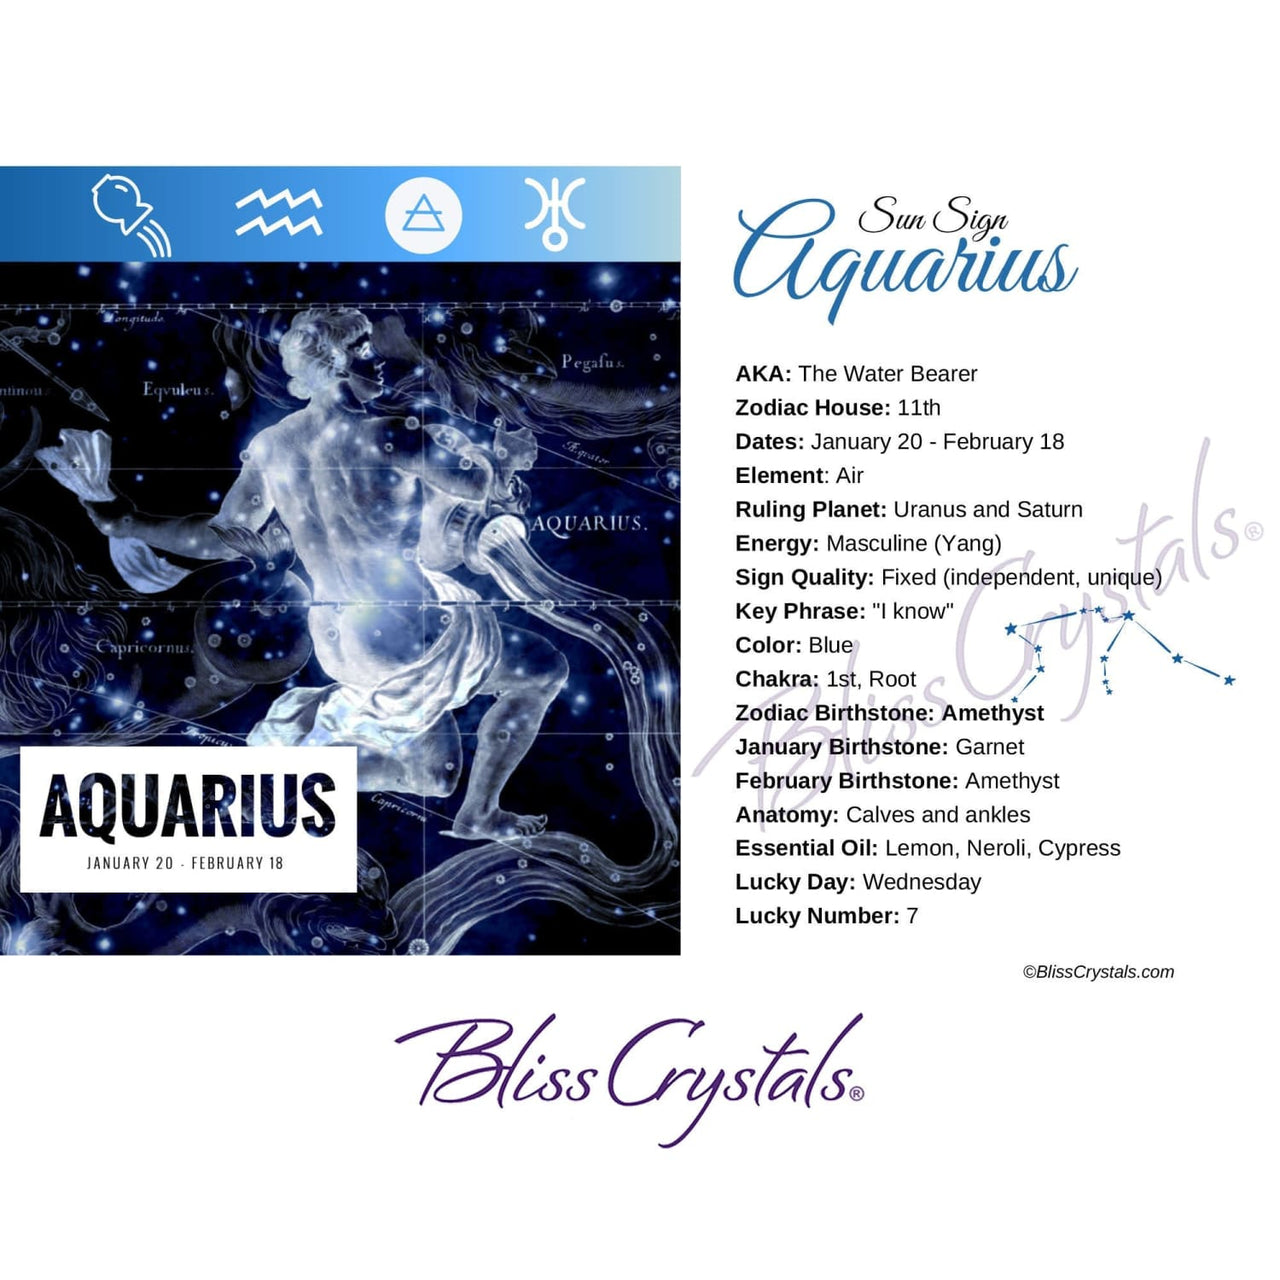 Bliss Crystals - Aquarius Zodiac Birthday Card with Crystal